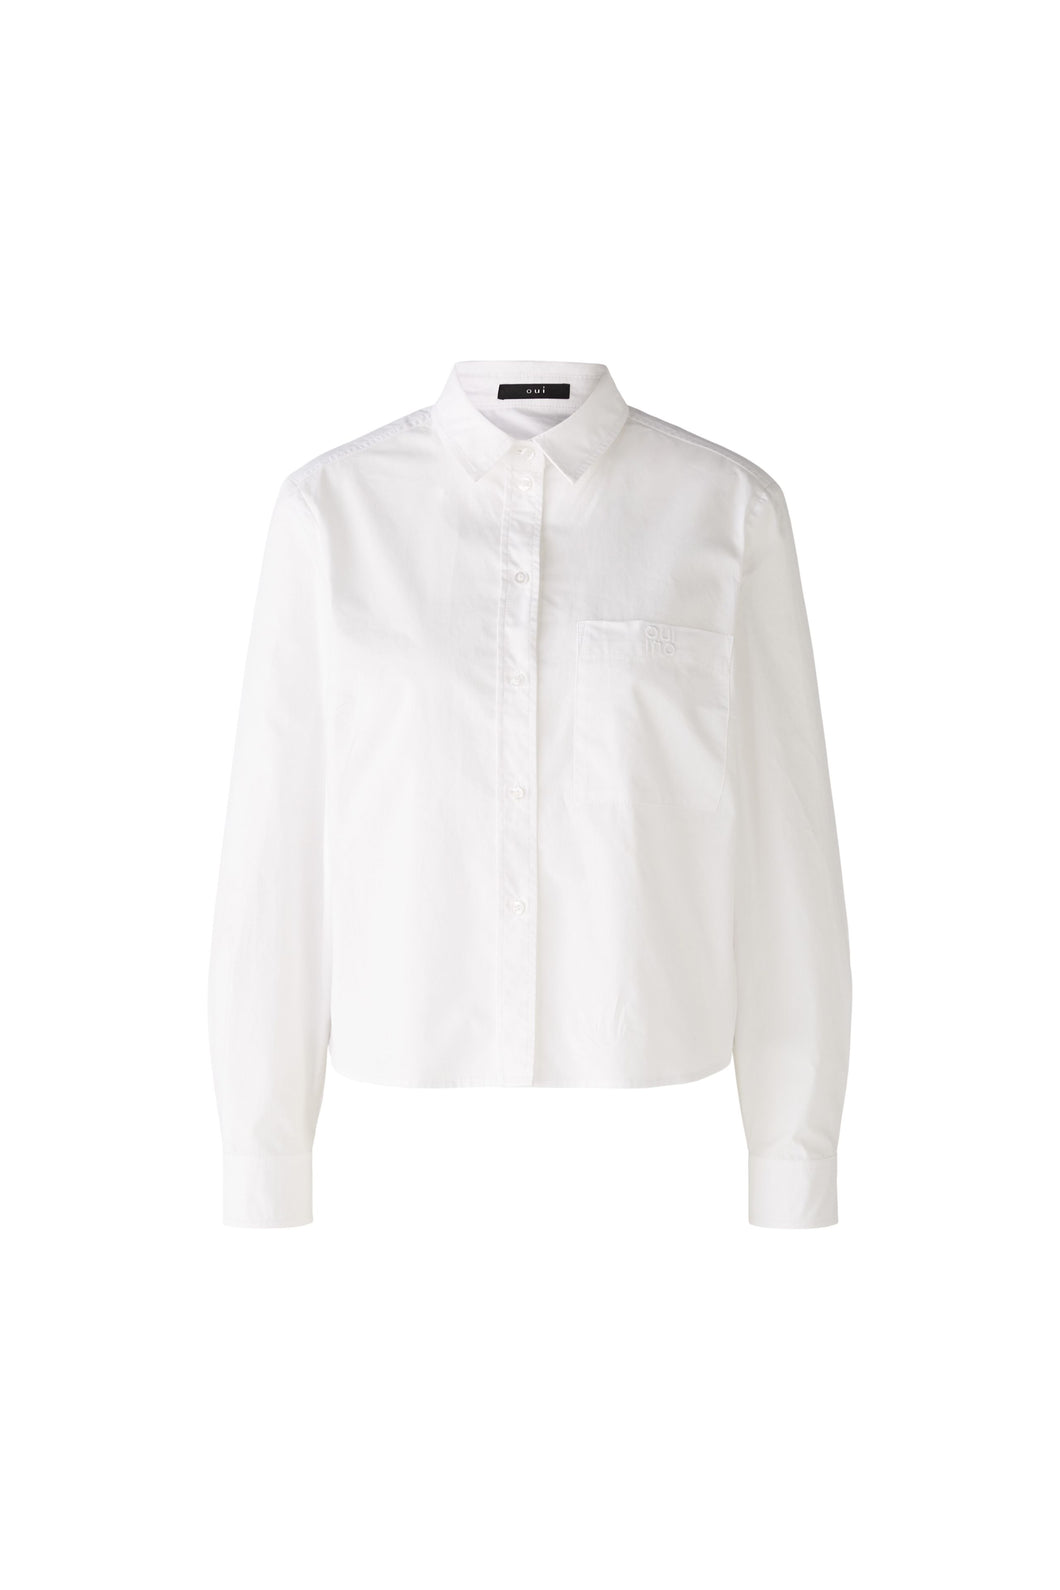 Oui - Cotton Shirt in White